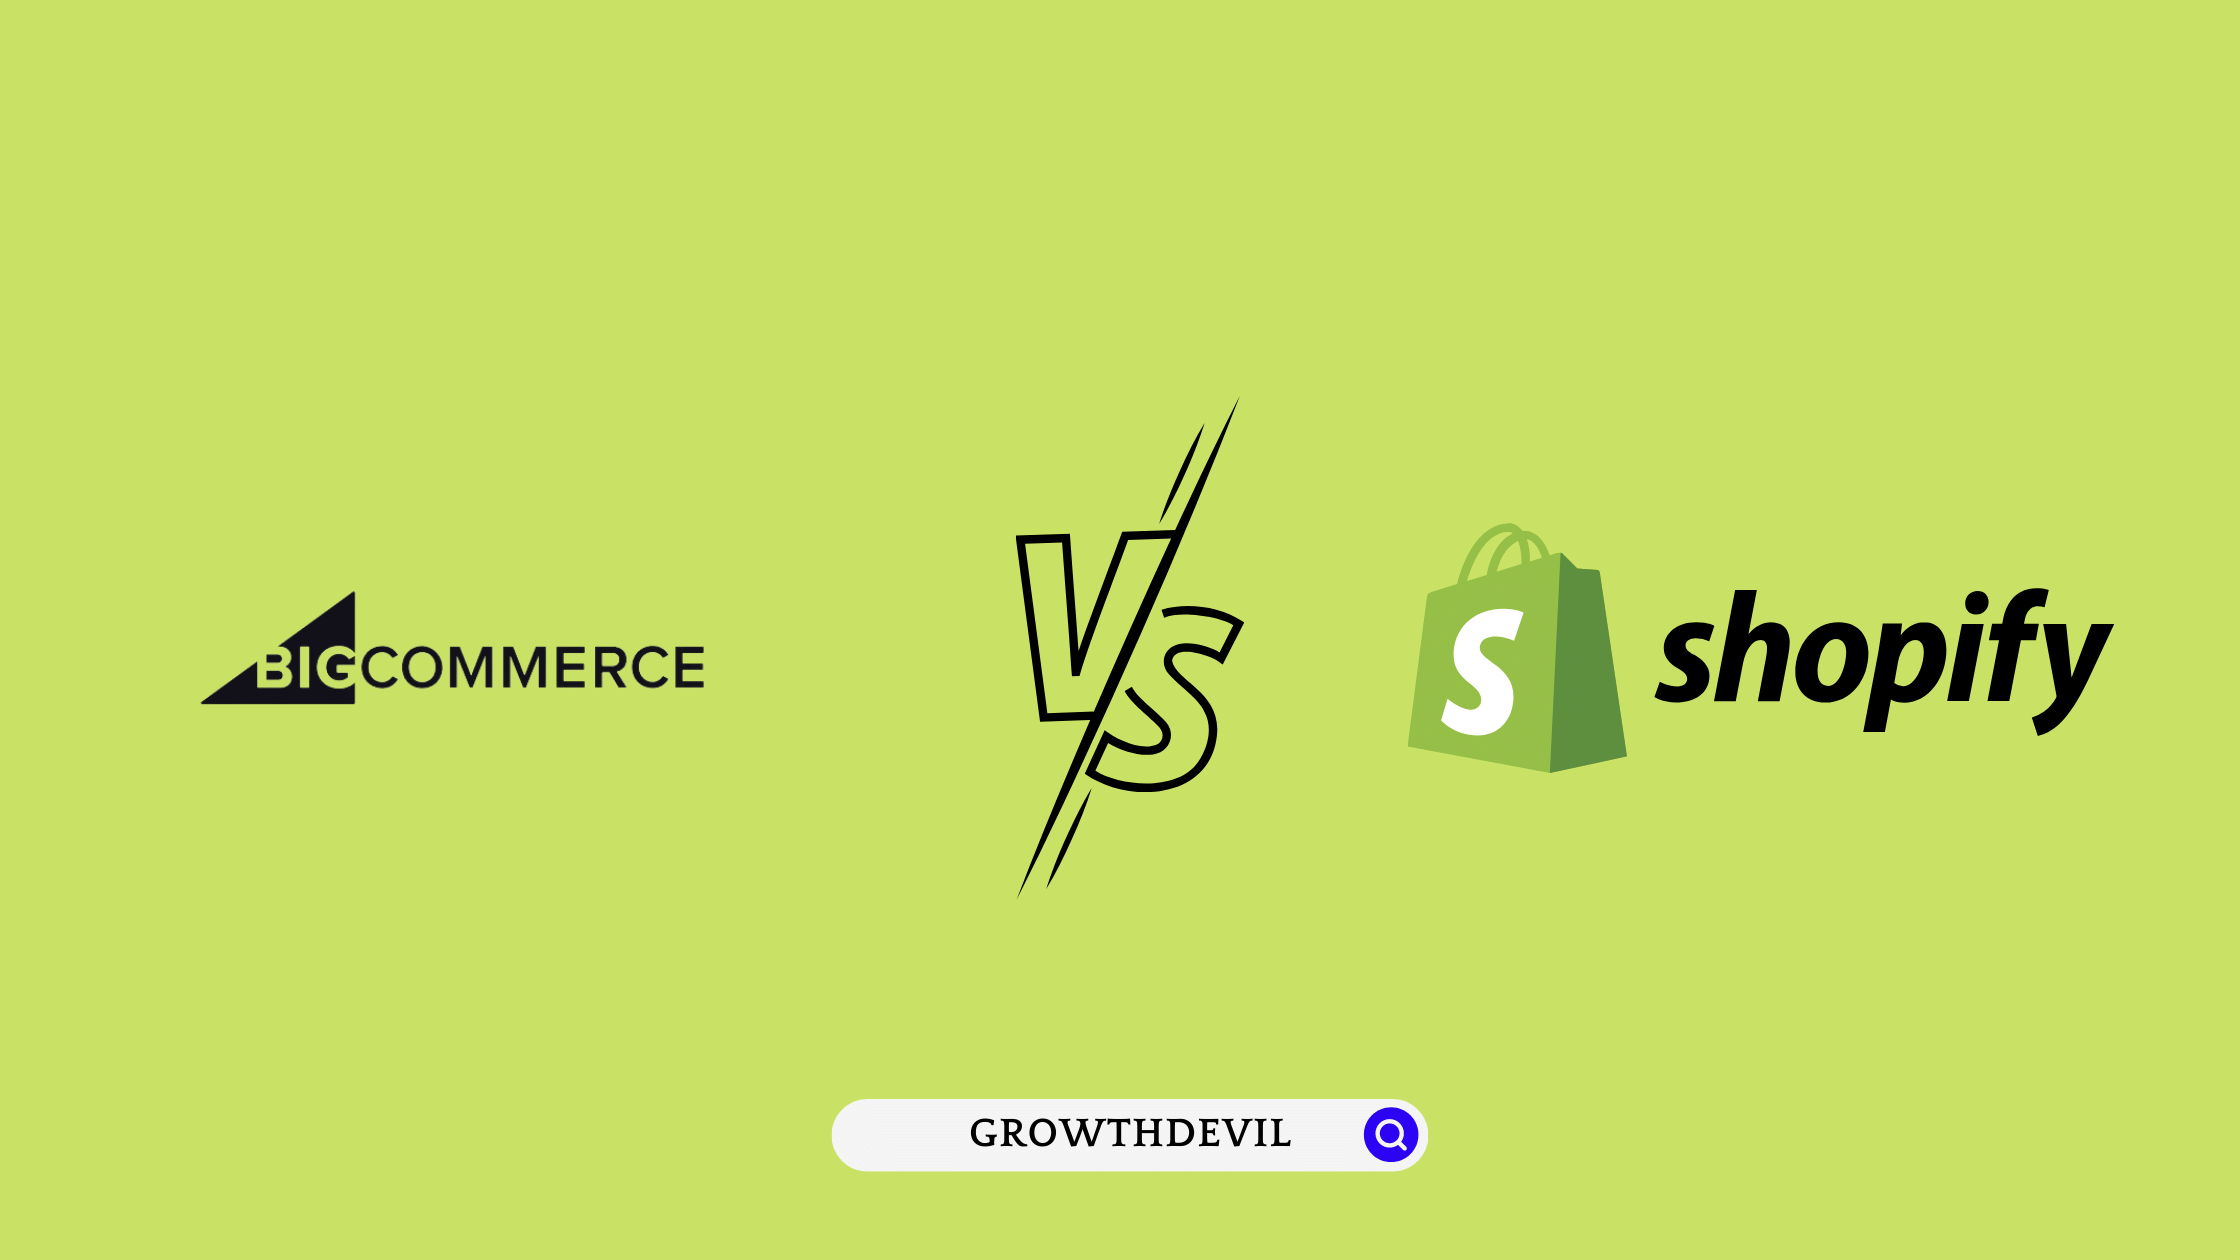 Bigcommerce vs Shopify - GrowthDevil